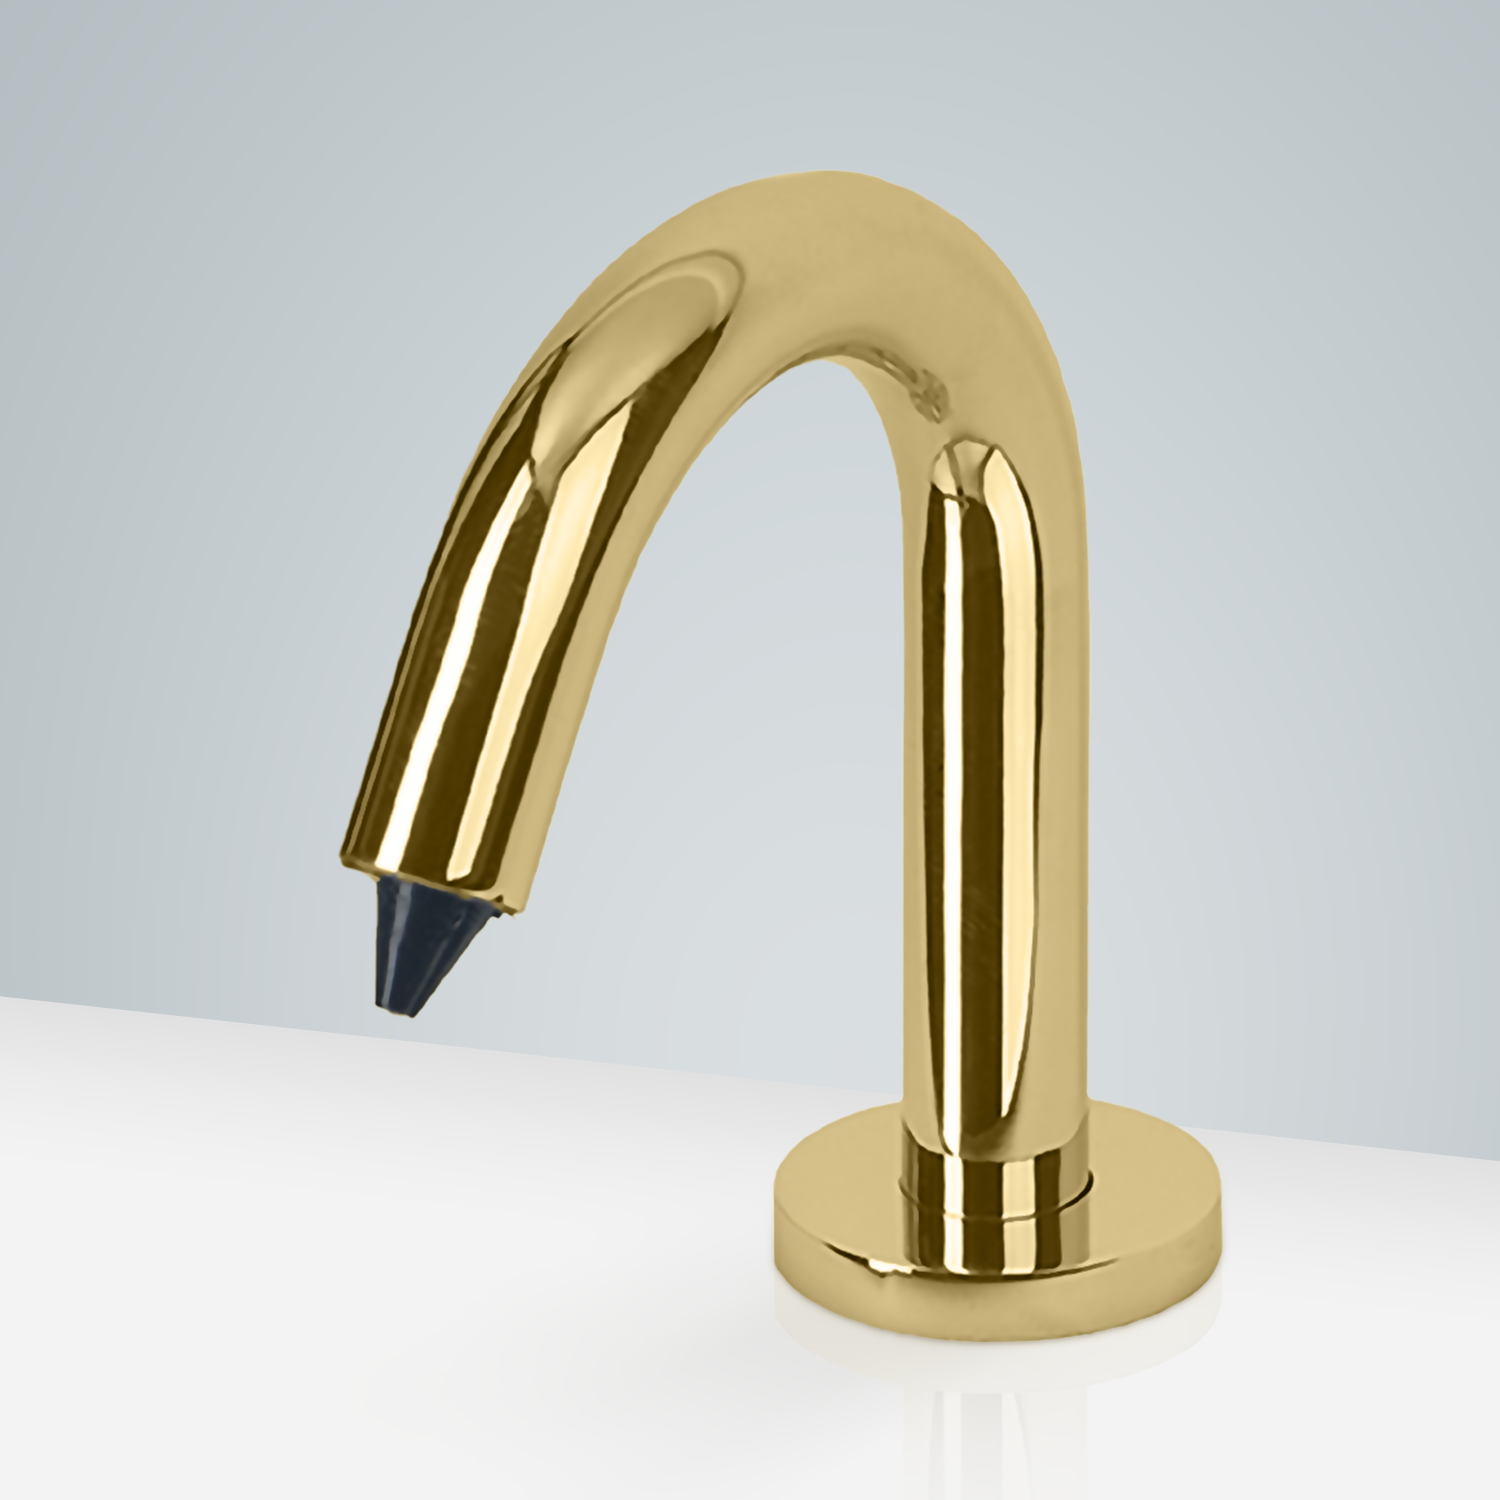 Dijon Sensor Deck Mount Commercial Soap Dispenser In Polished Brass Finish